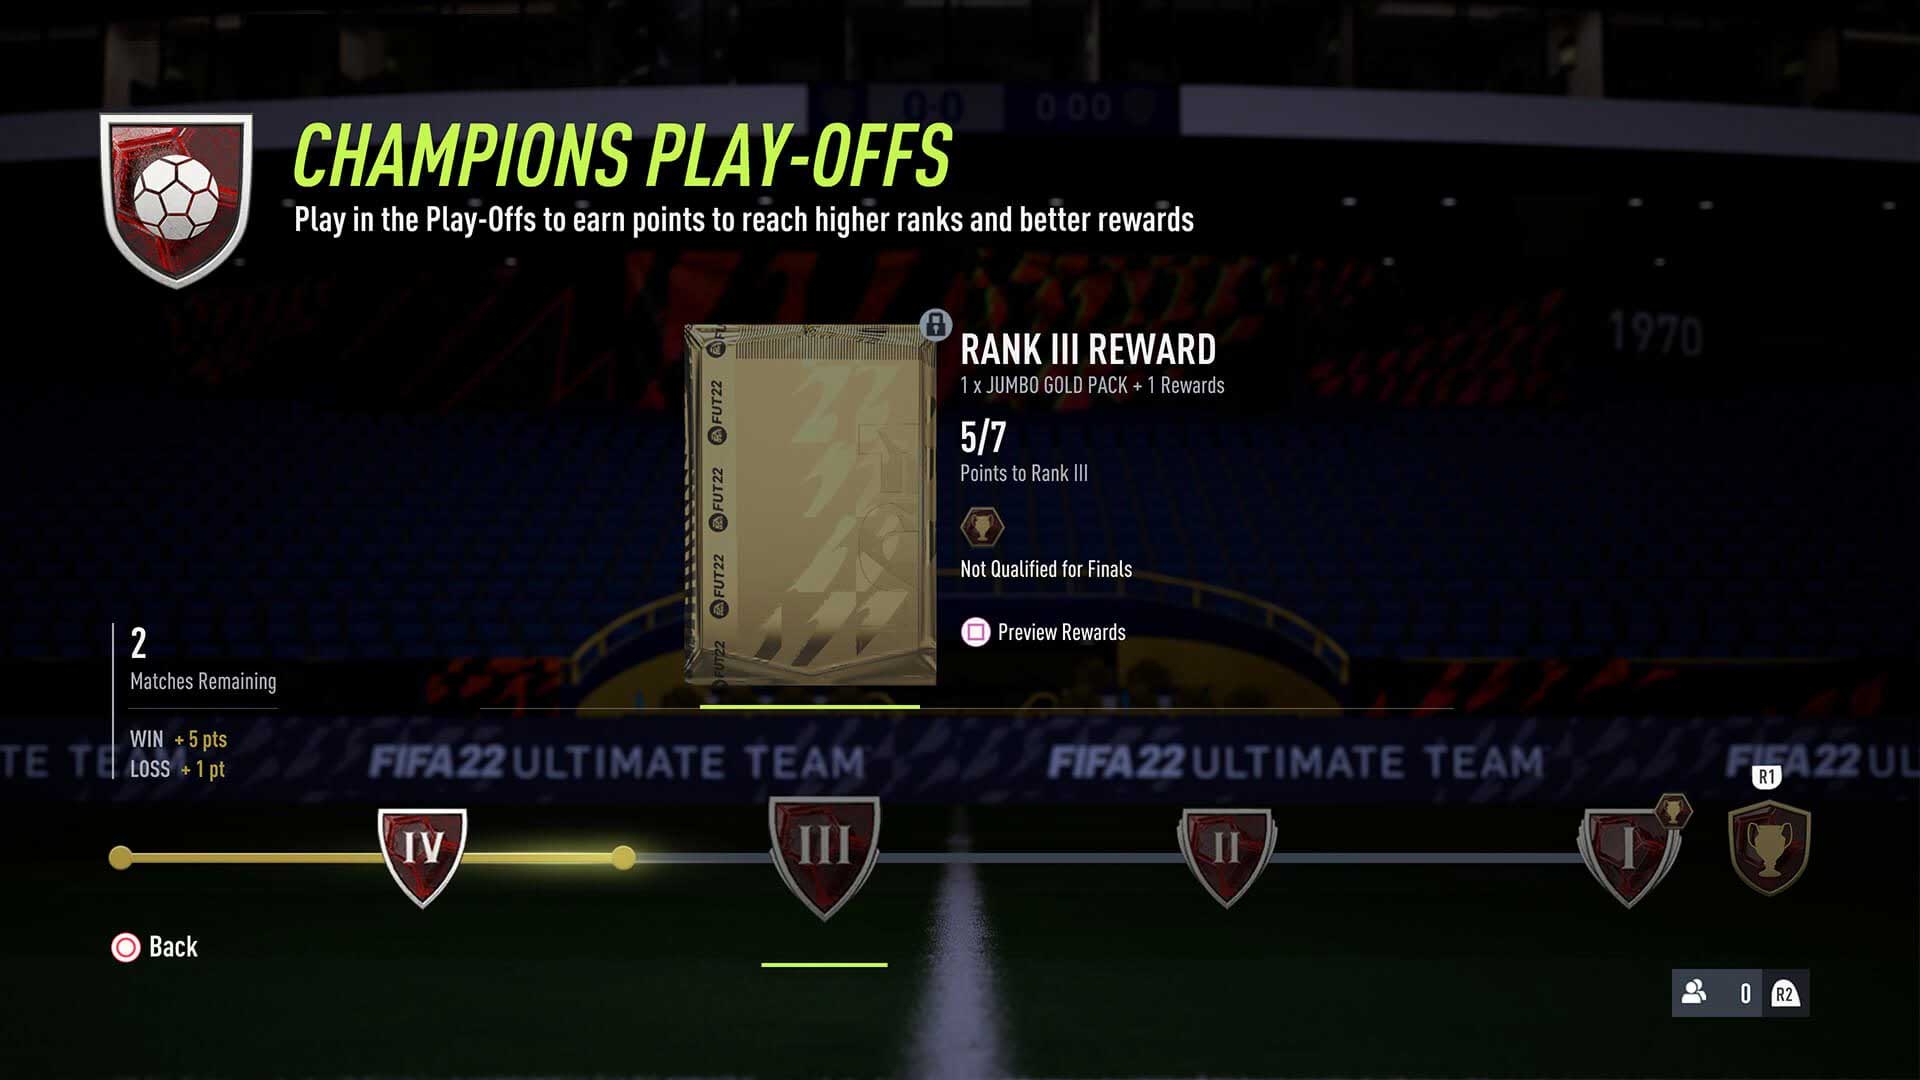 FIFA 22 screenshot of Champions Play-Offs screen